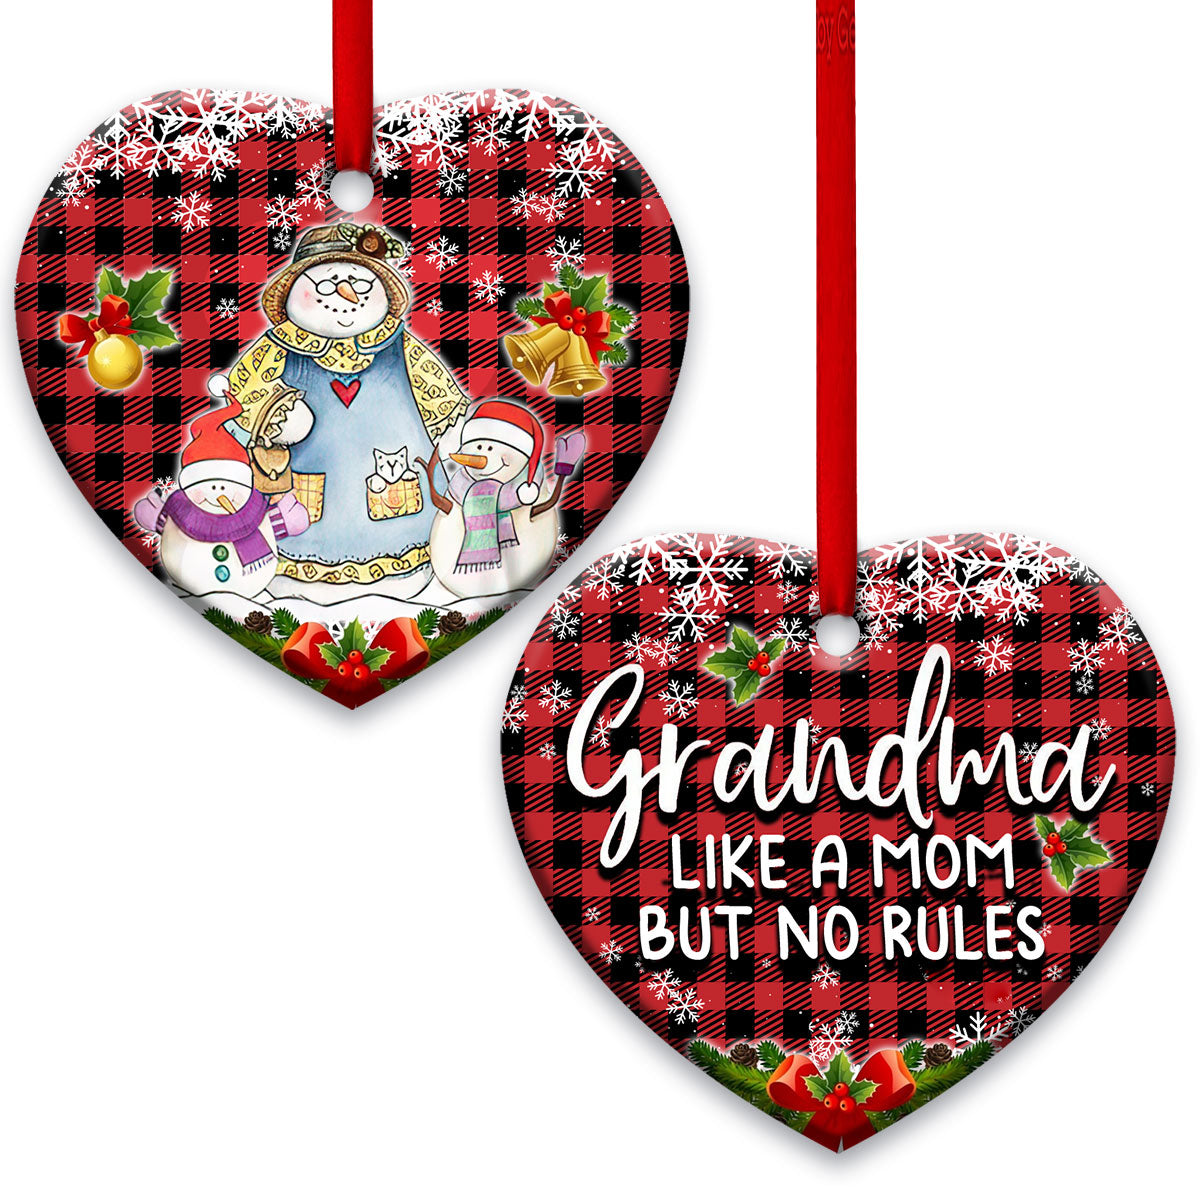 Family Snowman Grandma Like Mom But No Rules Love For All Grandkids - Heart Ornament - Owls Matrix LTD